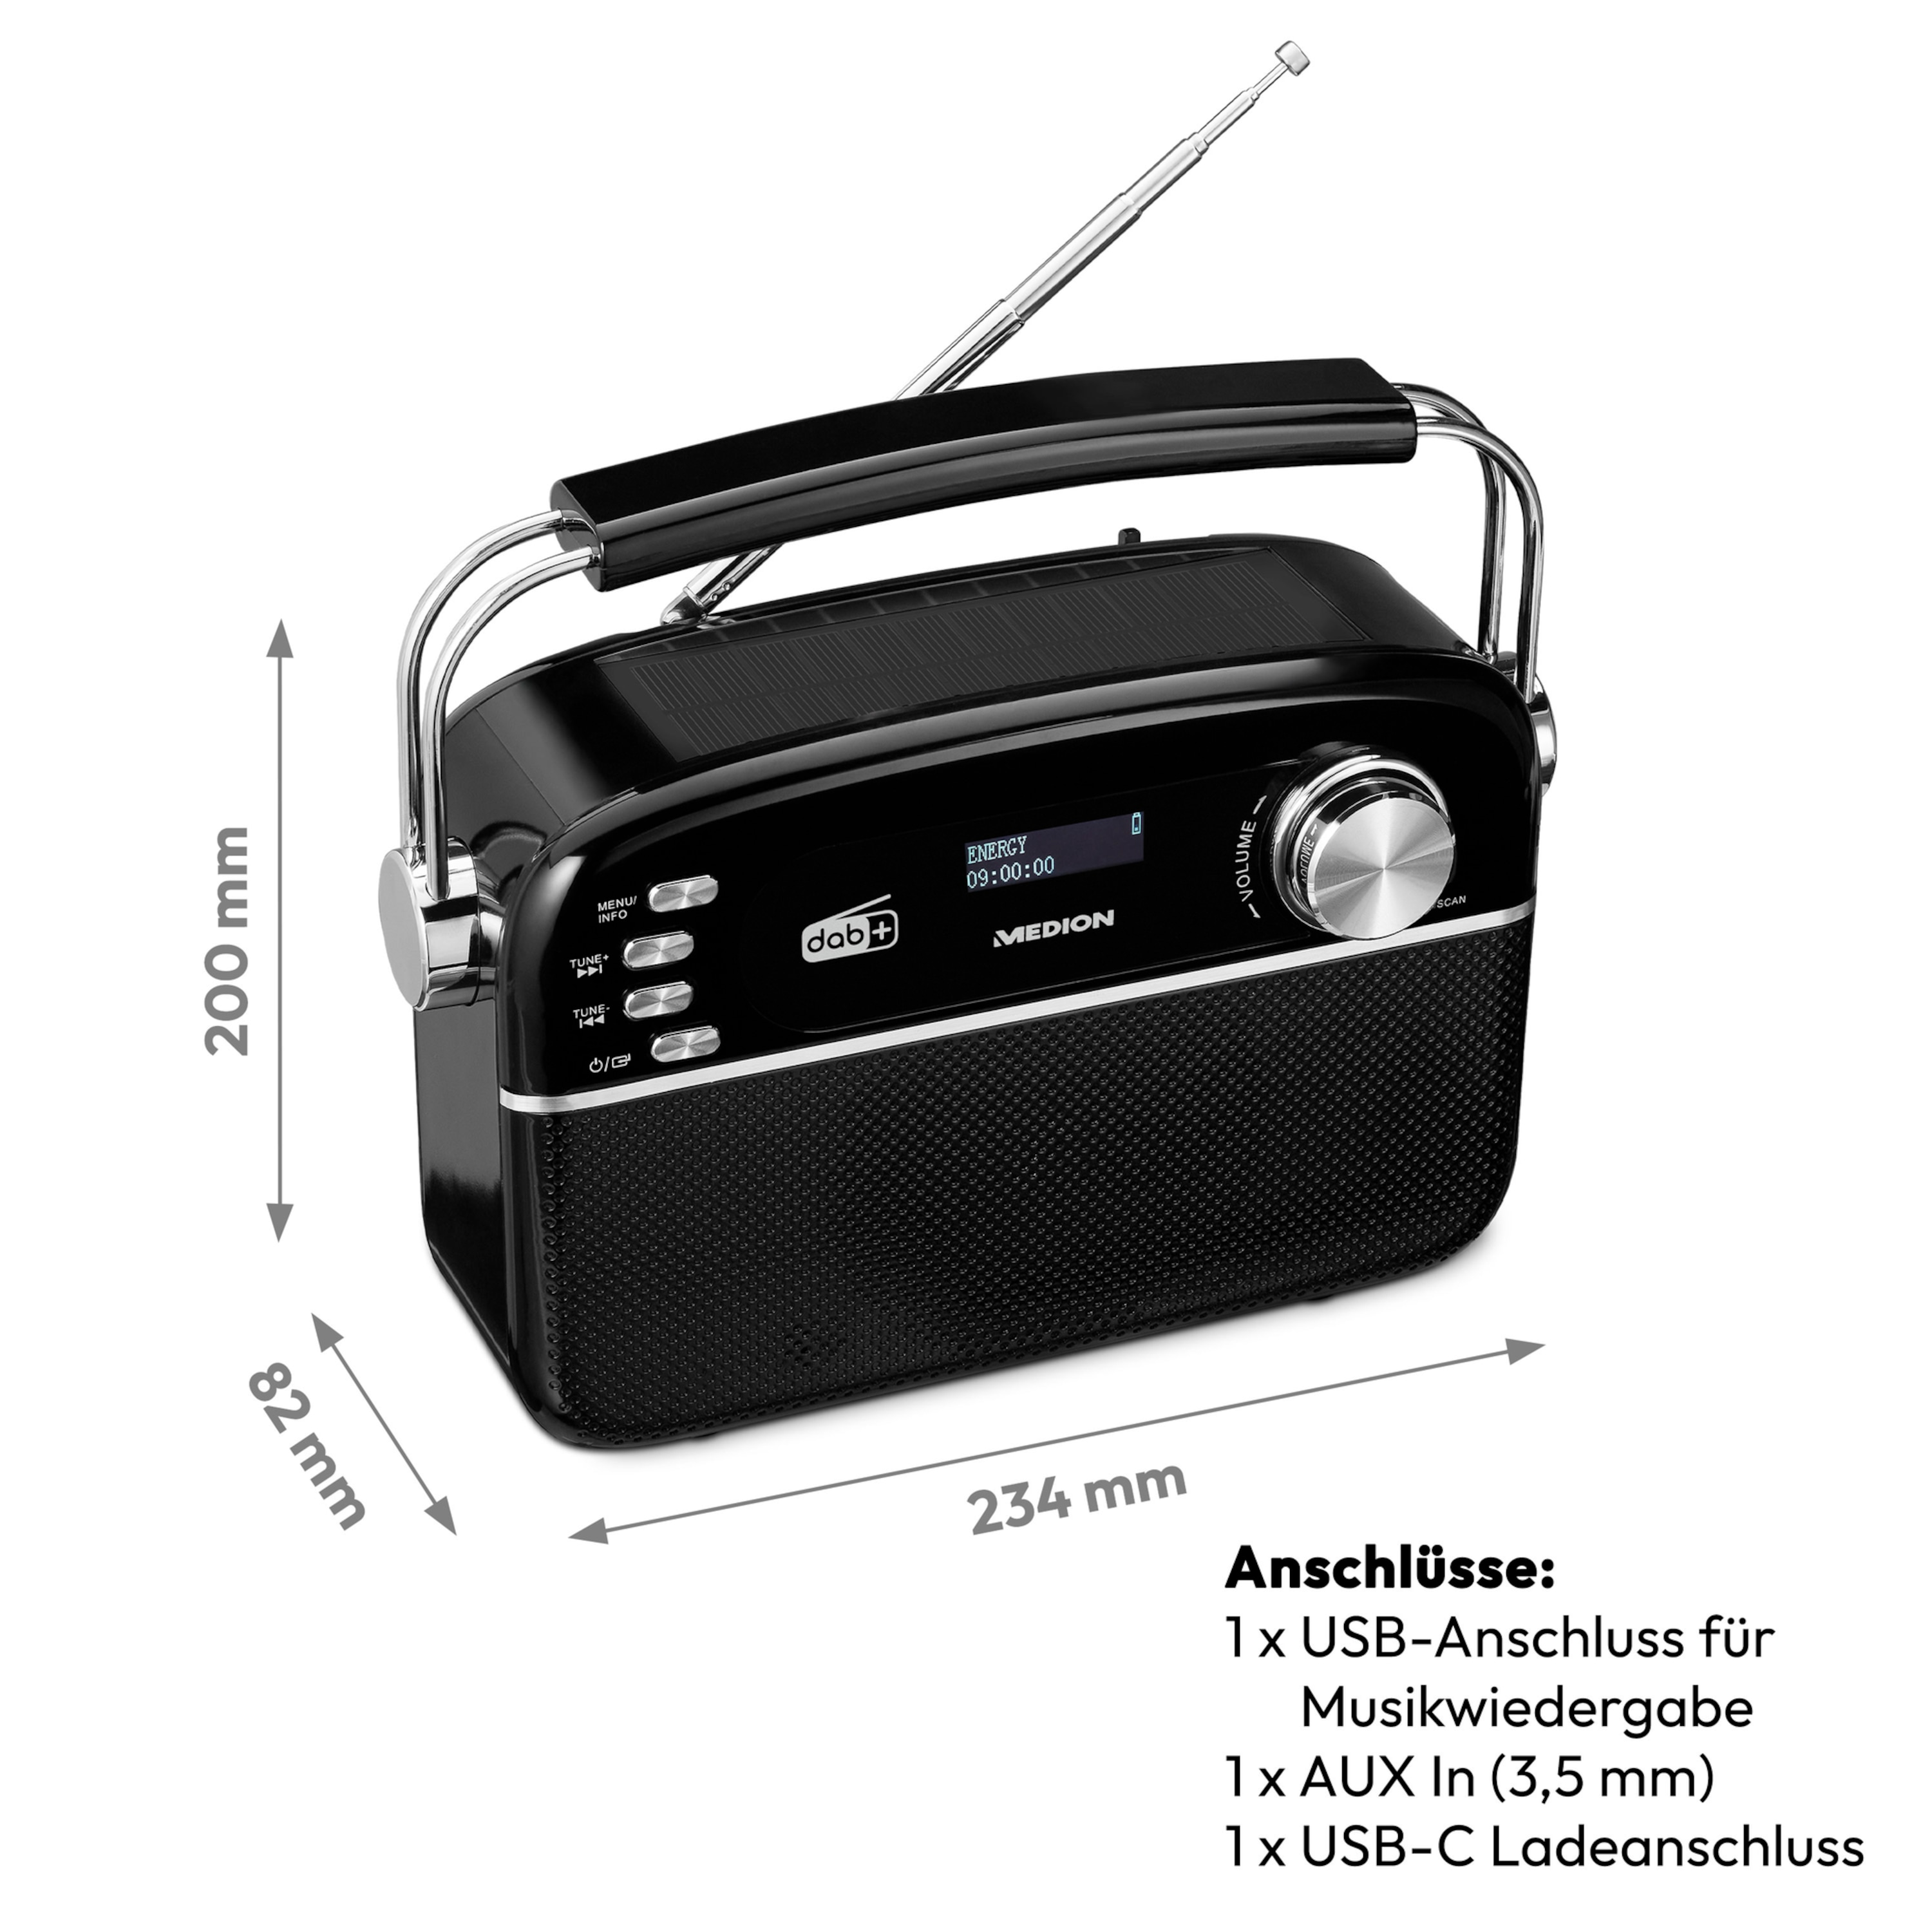 MEDION MEDION LIFE E66809 AUX Solarpanel Retro-Radio schwarz KW, Bluetooth Retro-Radio, schwarz USB DAB+/PLL-UKW